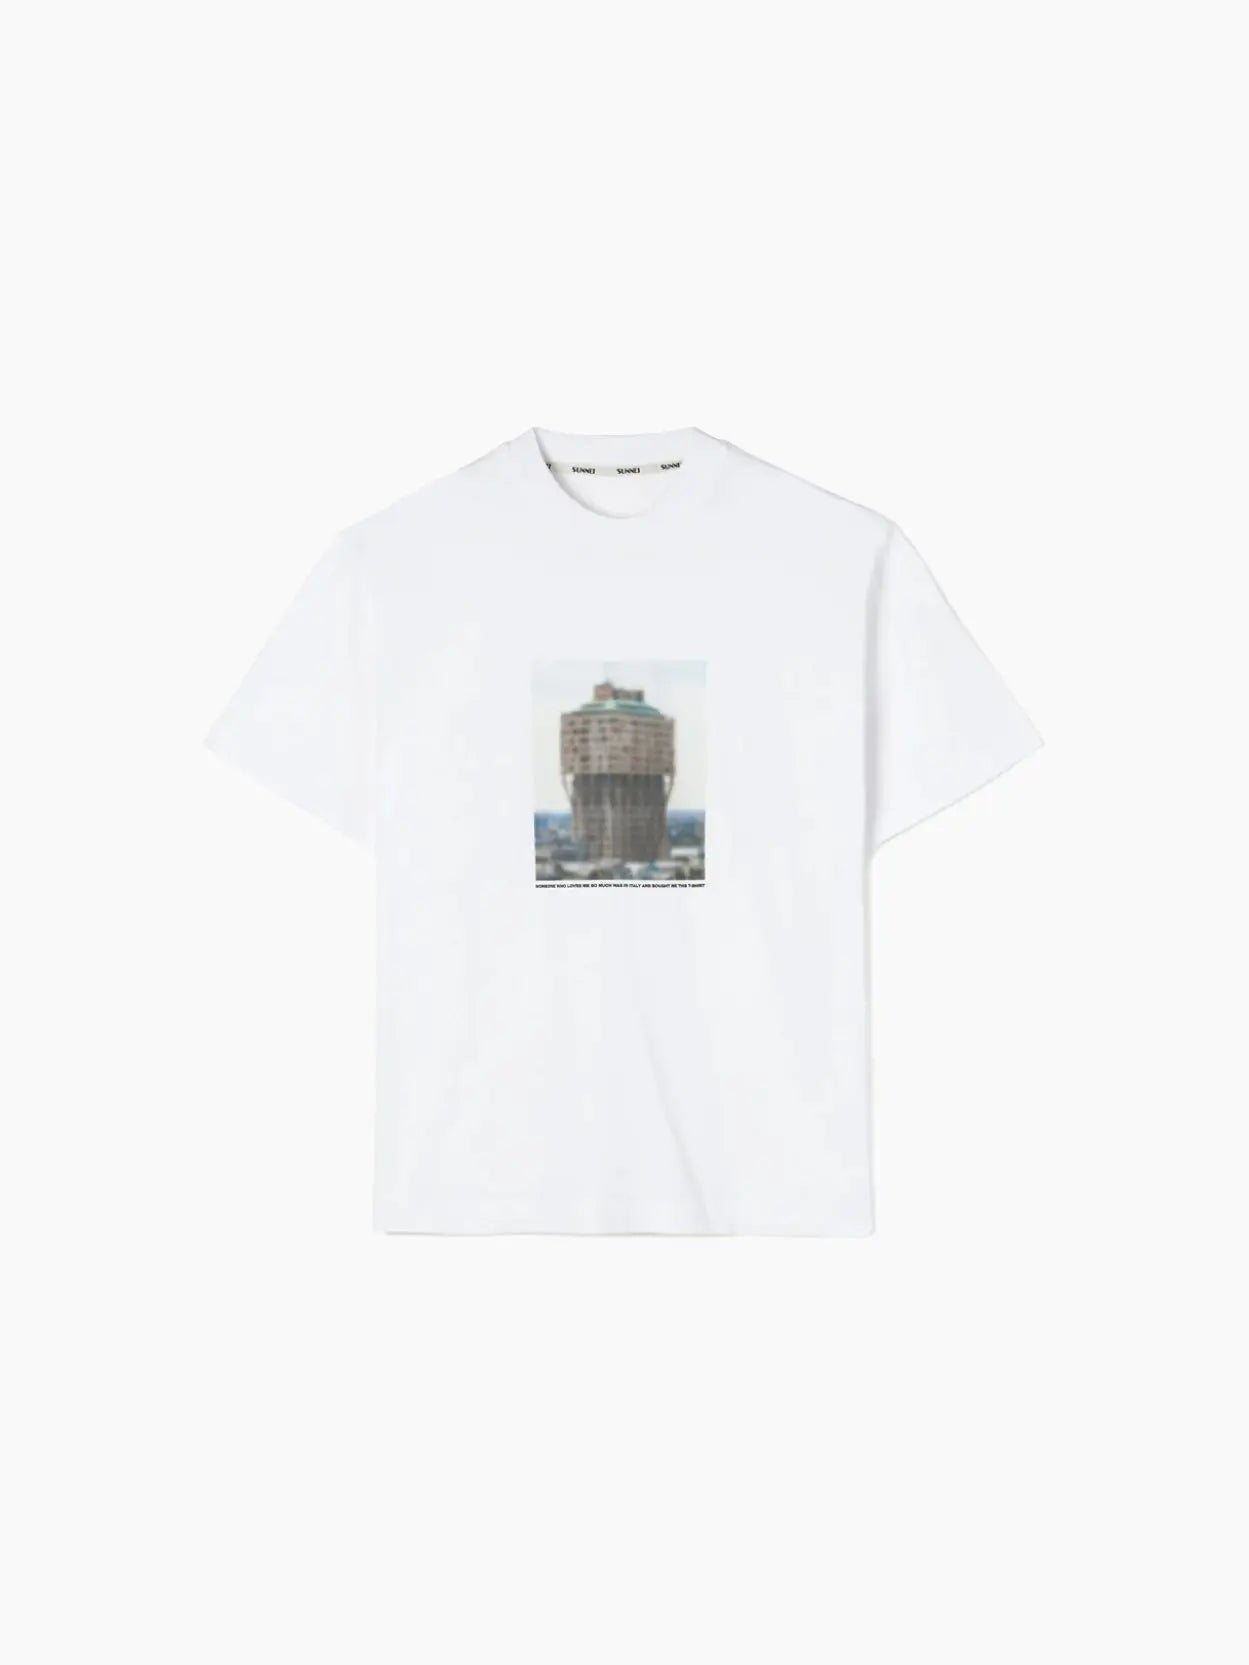 Torre Velasca T-Shirt Re-Edition Sunnei